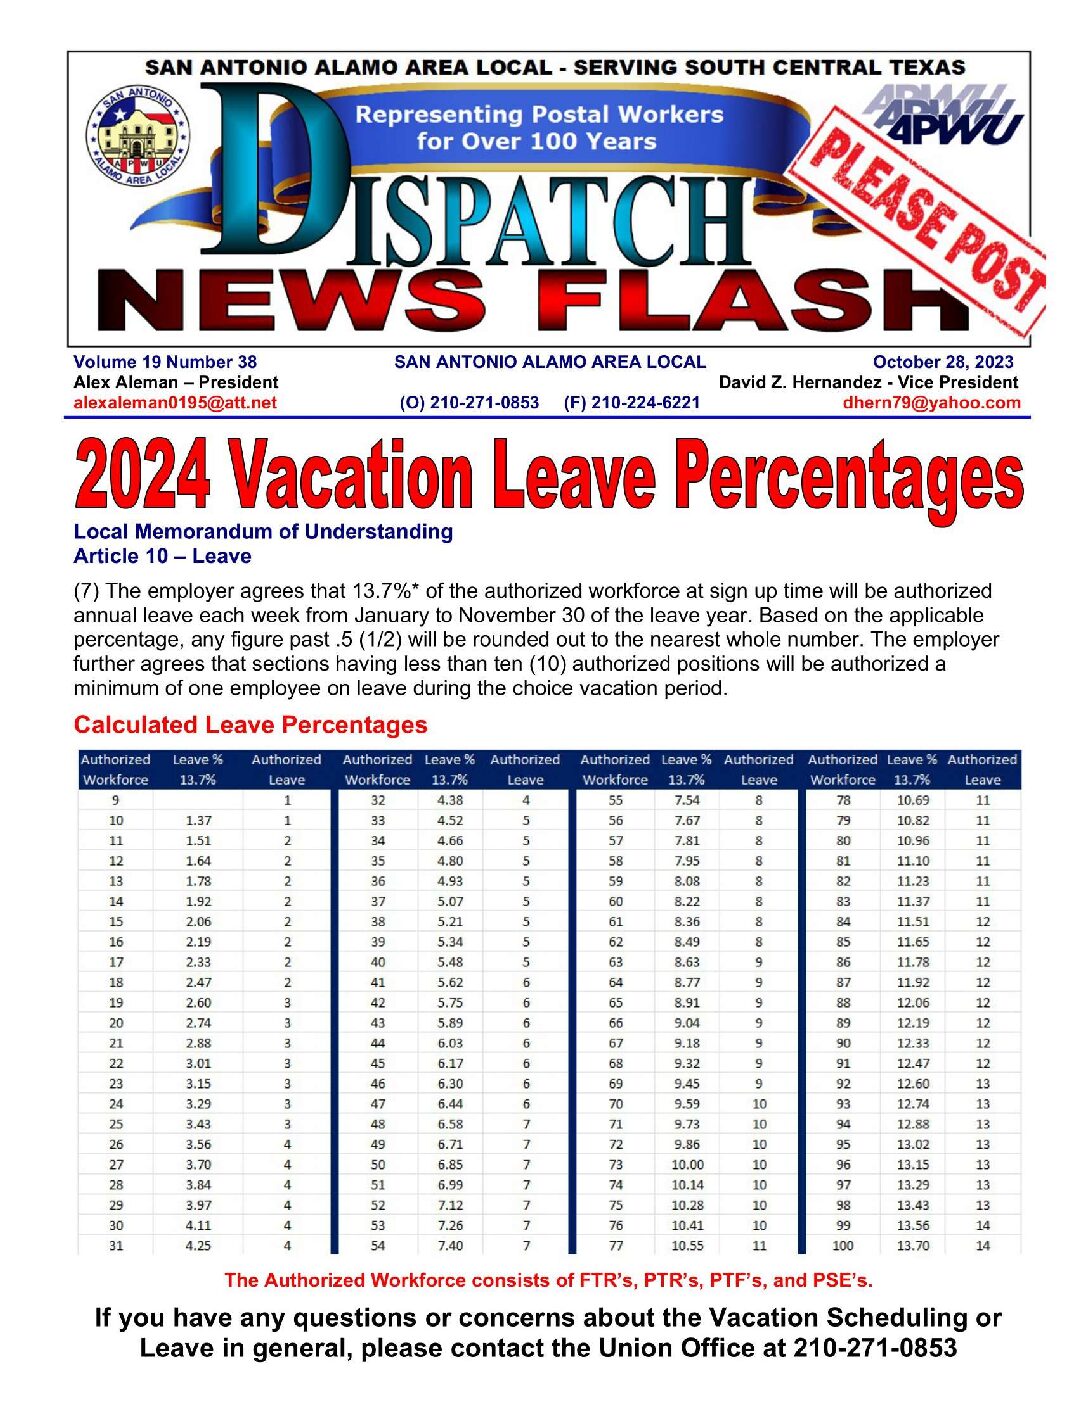 NewsFlash 19-38 Vacation Leave Percentages - 